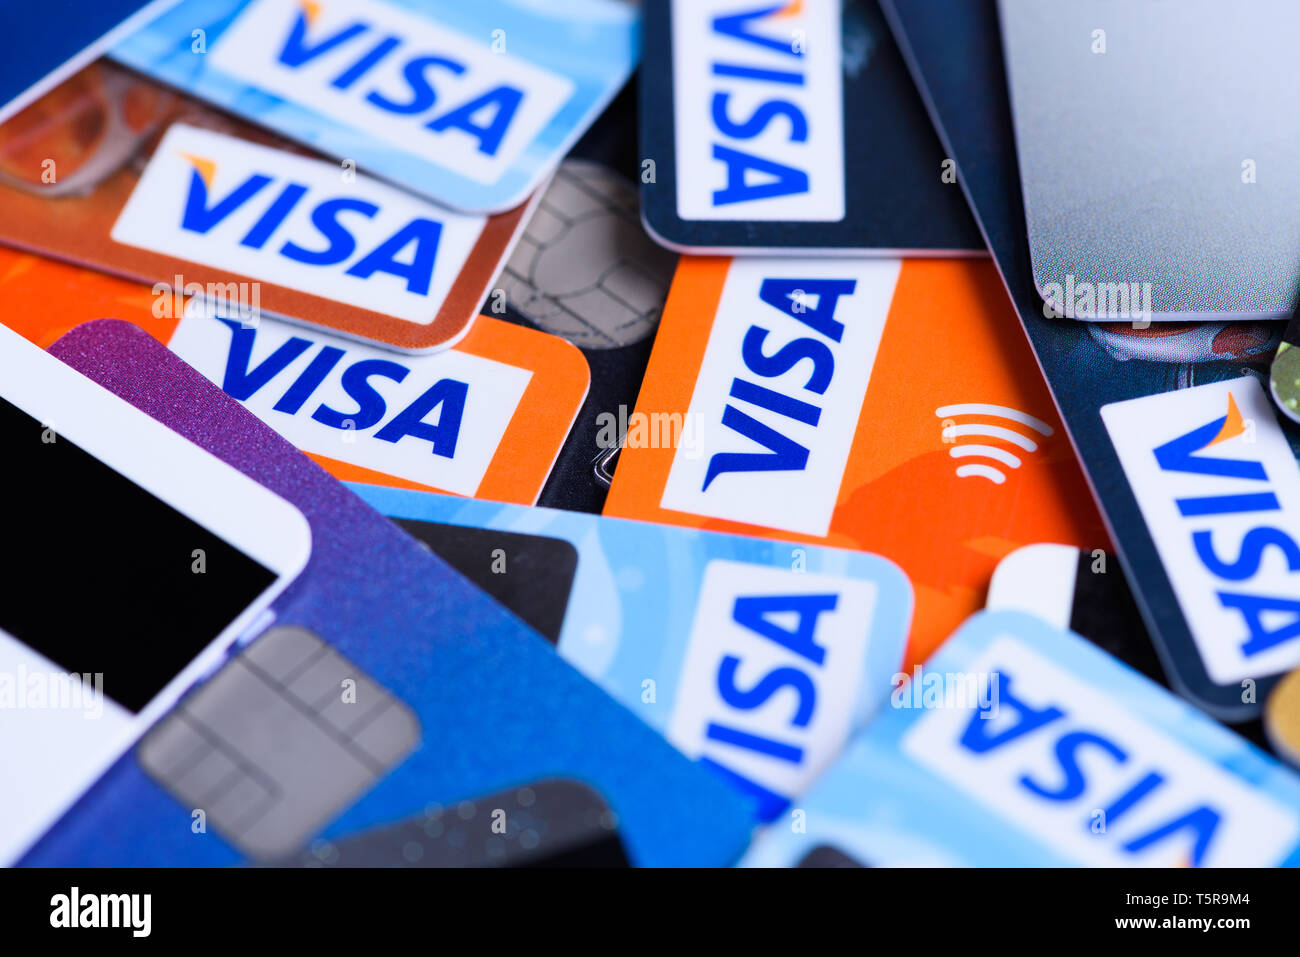 Krakau, Polen - 16. Juni 2017: Stapel Kunststoff bank Visa Kreditkarten, Kredit- und Debitkarten. Stockfoto